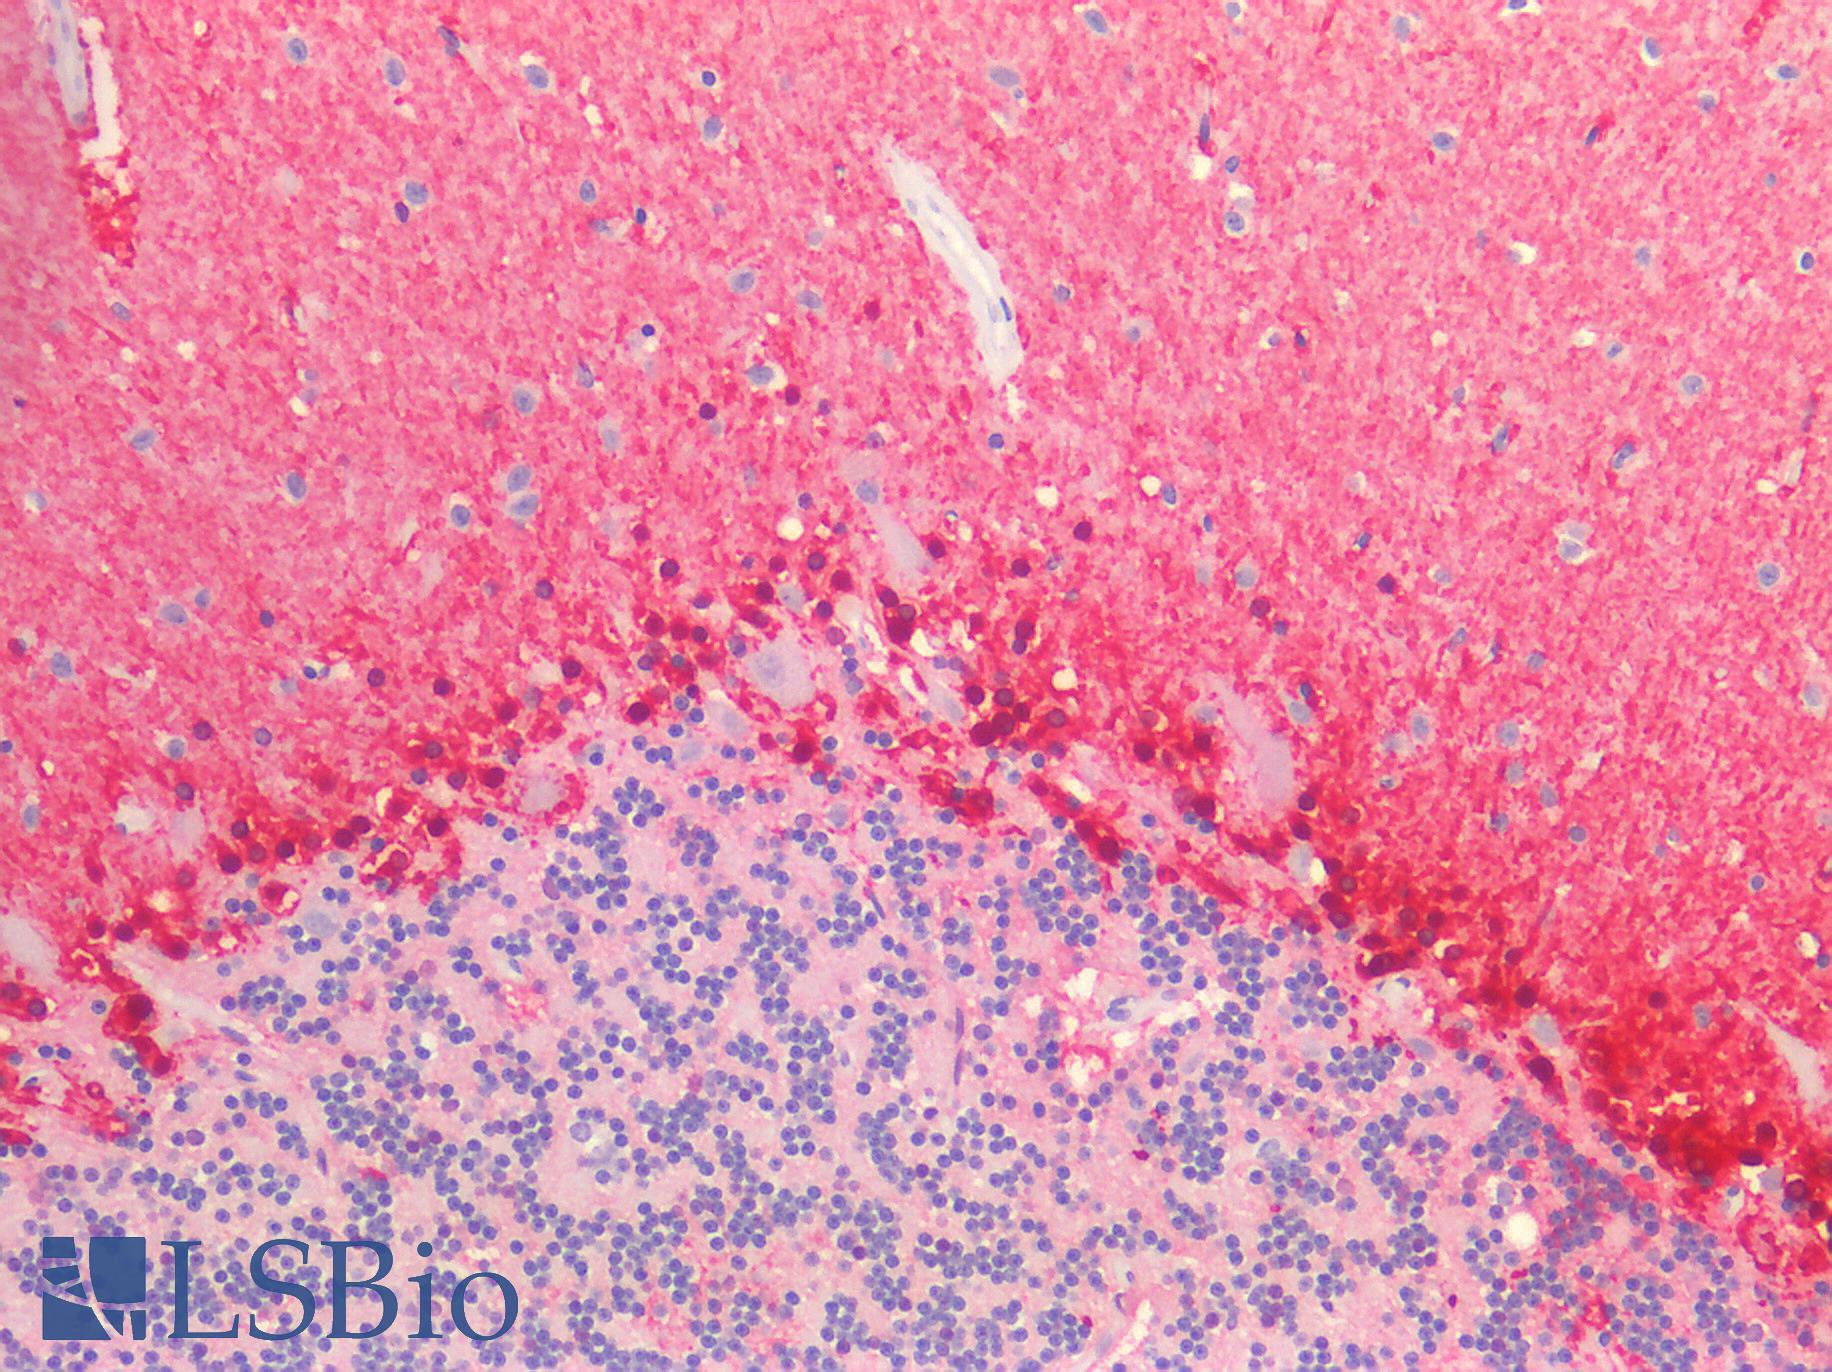 ALDH1A1 / ALDH1 Antibody - Human Brain, Cerebellum: Formalin-Fixed, Paraffin-Embedded (FFPE)